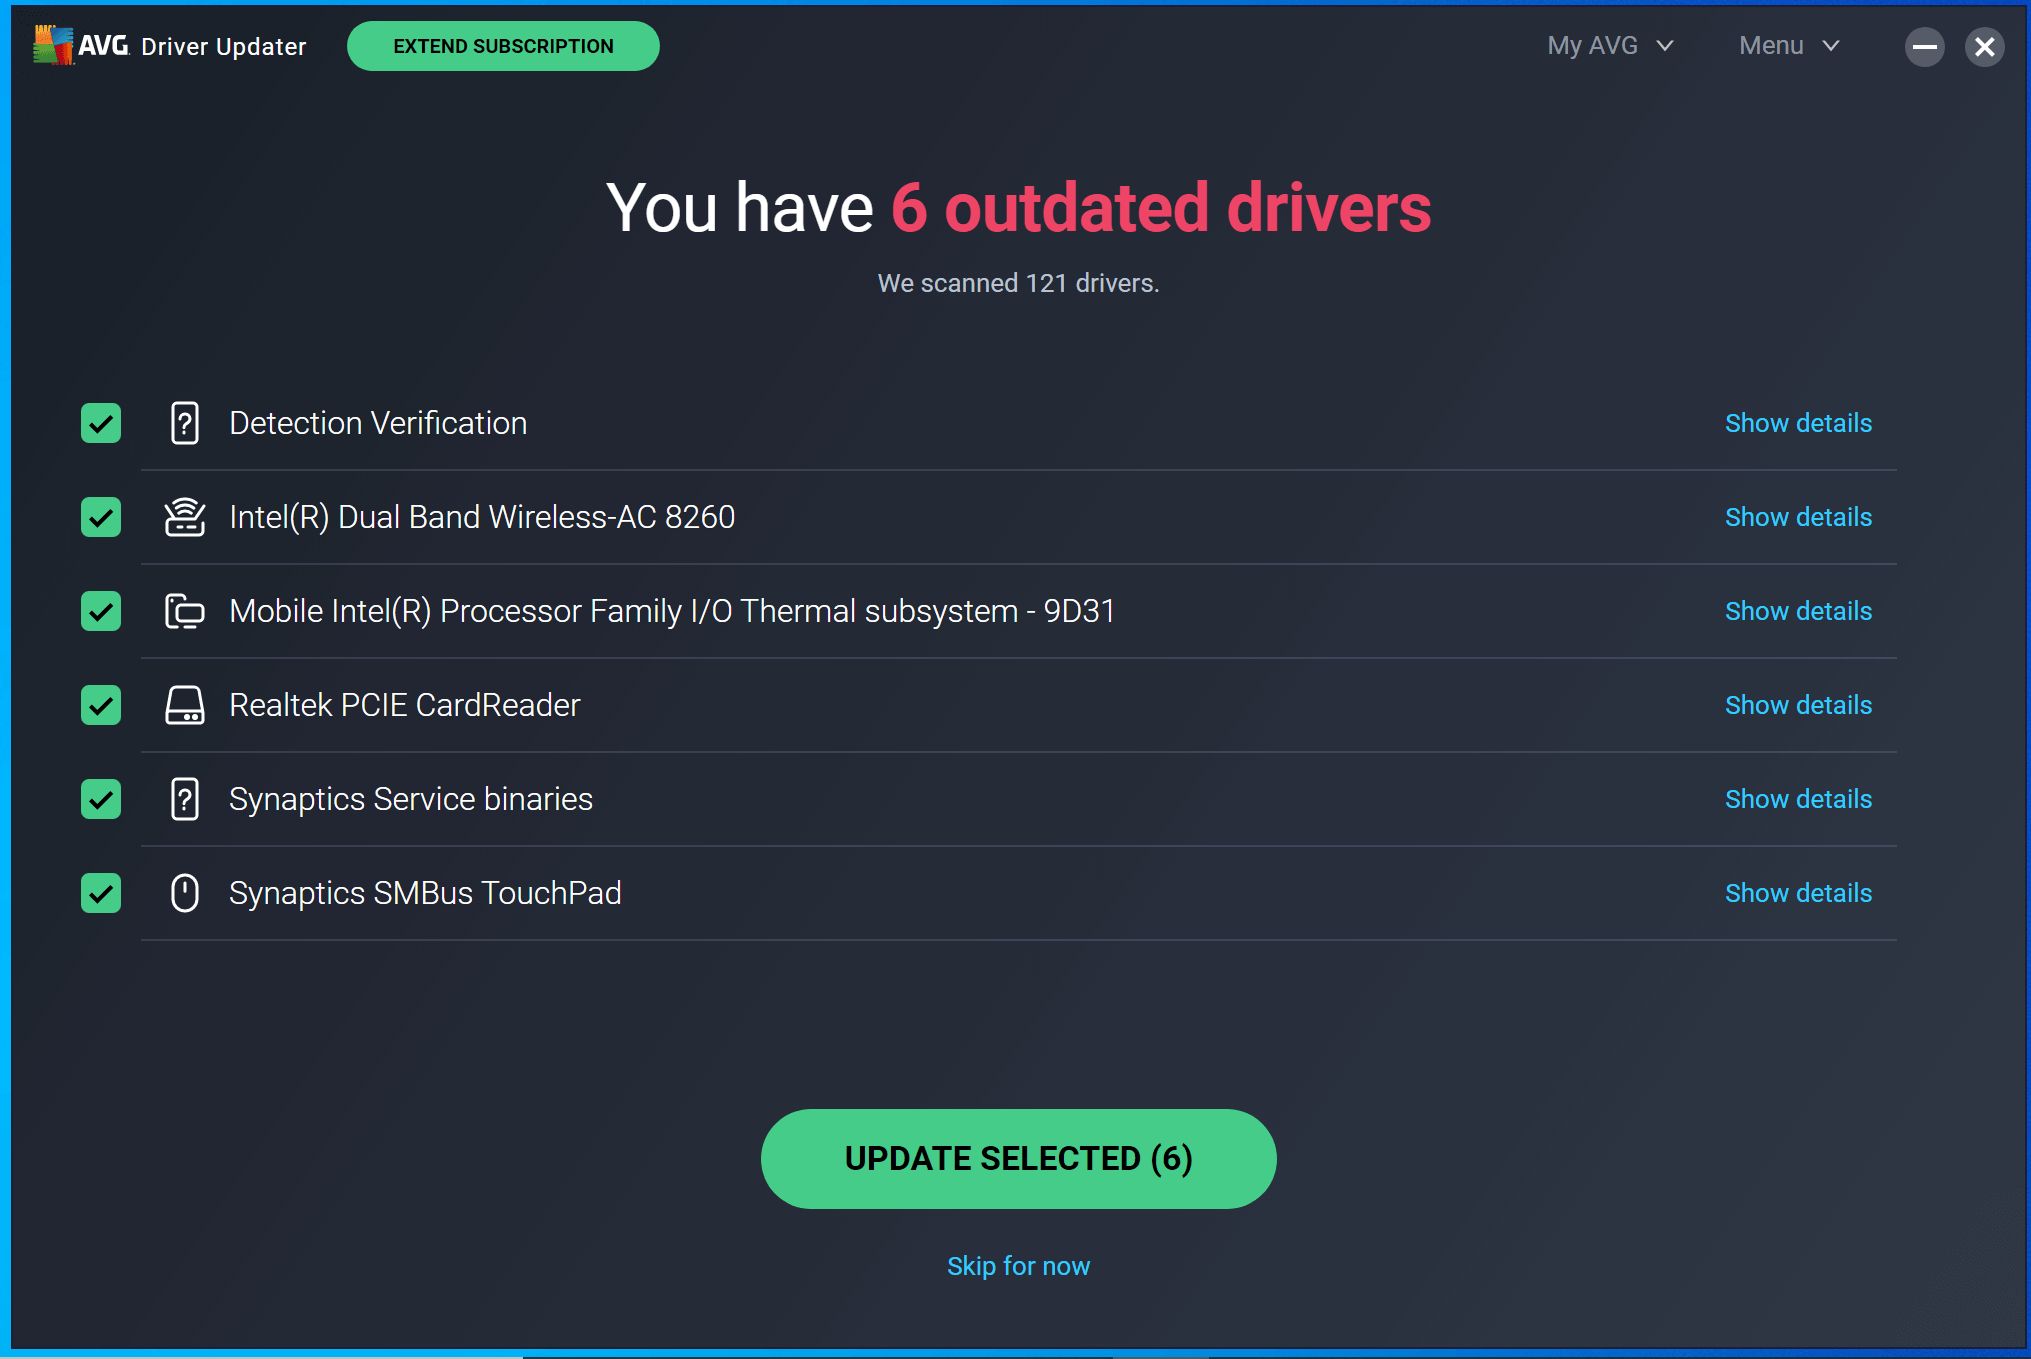 AVG Driver Updater Key (1 Year / 3 PCs) 6.77 USD